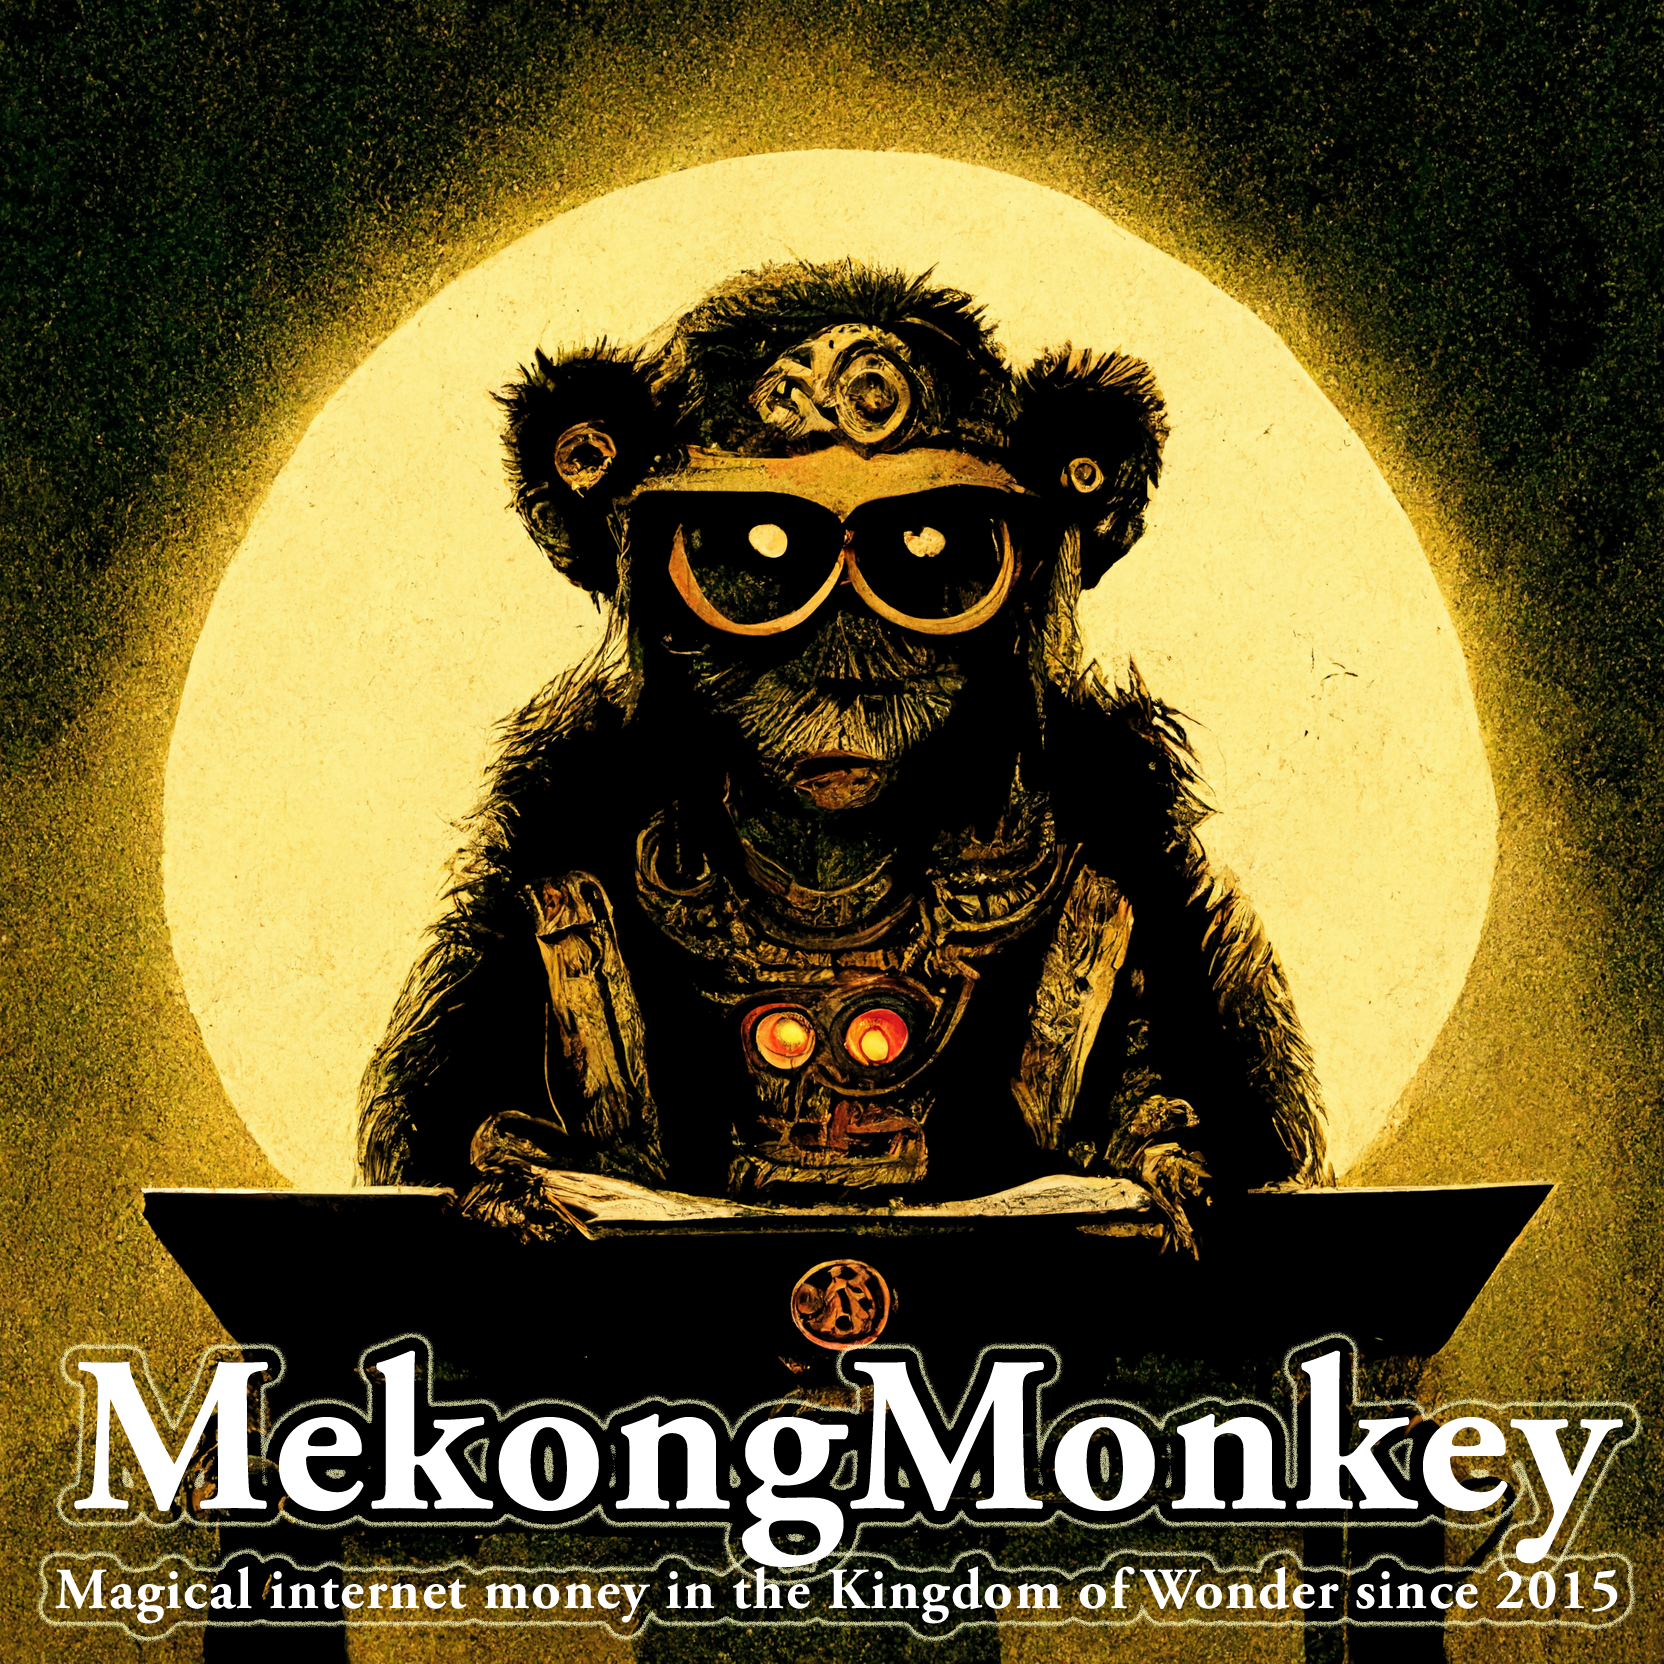 MekongMonkey - Magical internet money in the Kingdom of Wonder since 2015